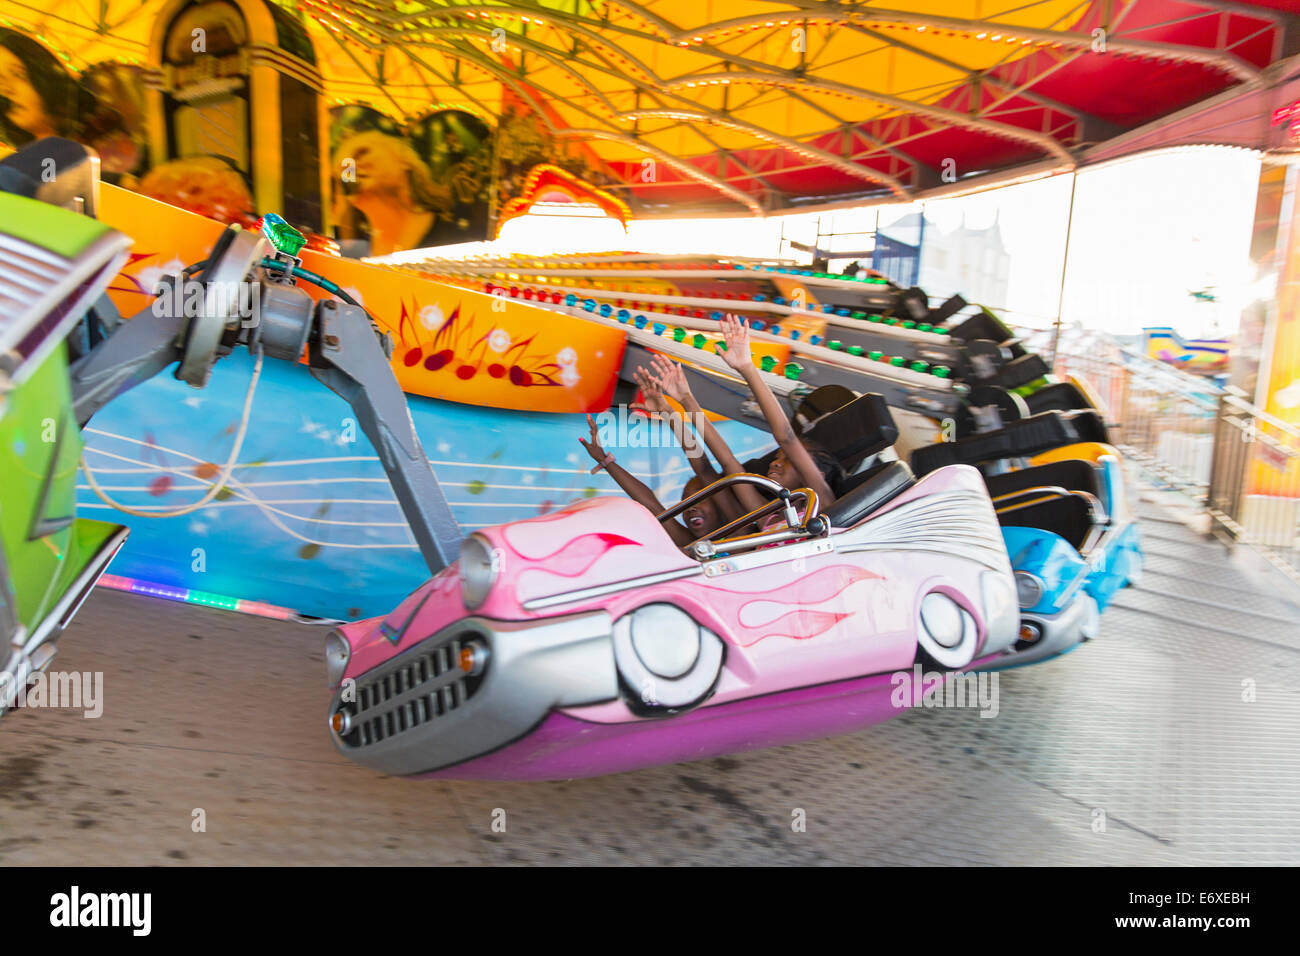 USA,New Jersey Atlantic City,acier,Pier,midway amusement park ride with kids holding arms up Banque D'Images